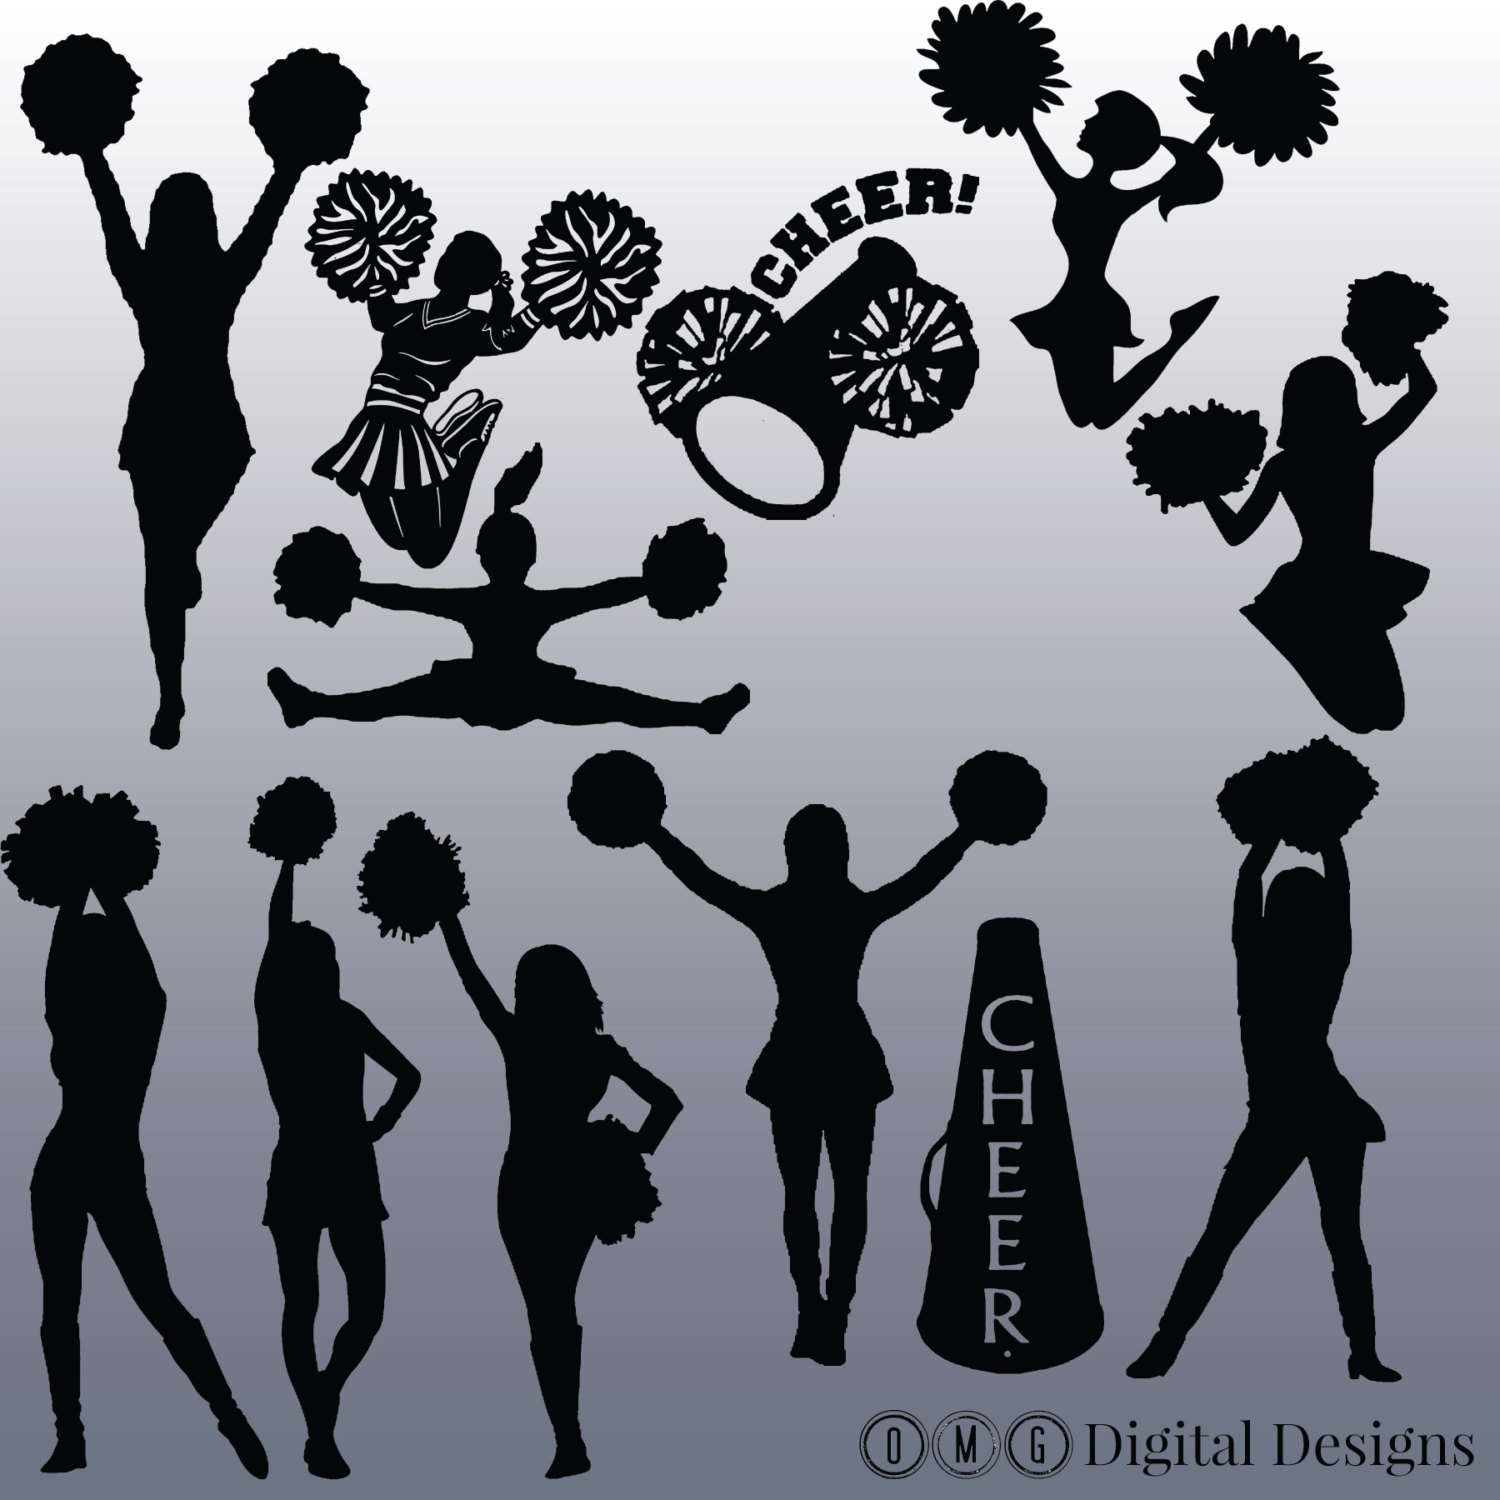 12 Cheerleader Silhouette Digital Clipart Images, Clipart Design Elements, Instant Download, Black Silhouette Clip art